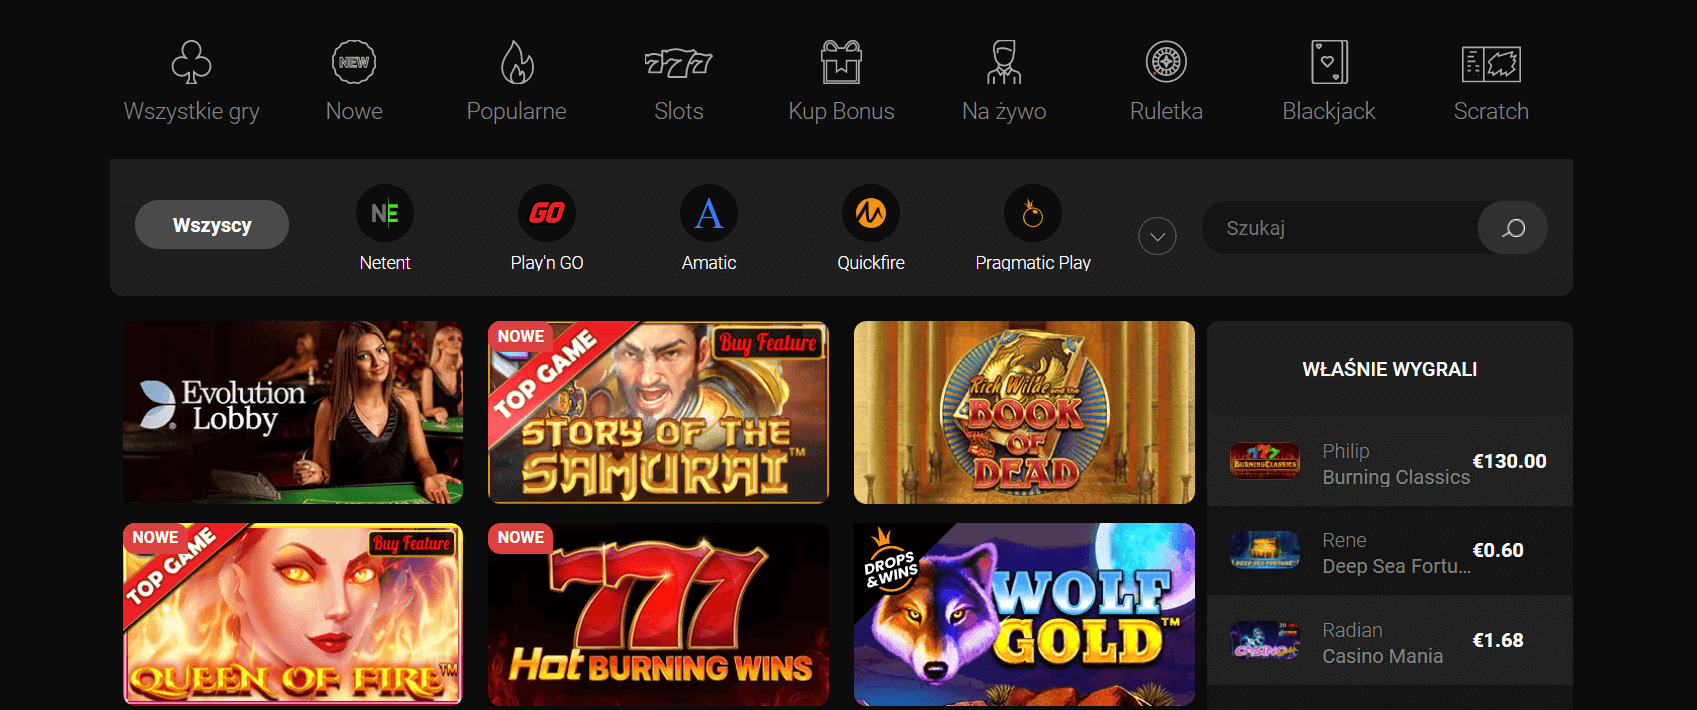 betchan casino gry kasynowe screenshot